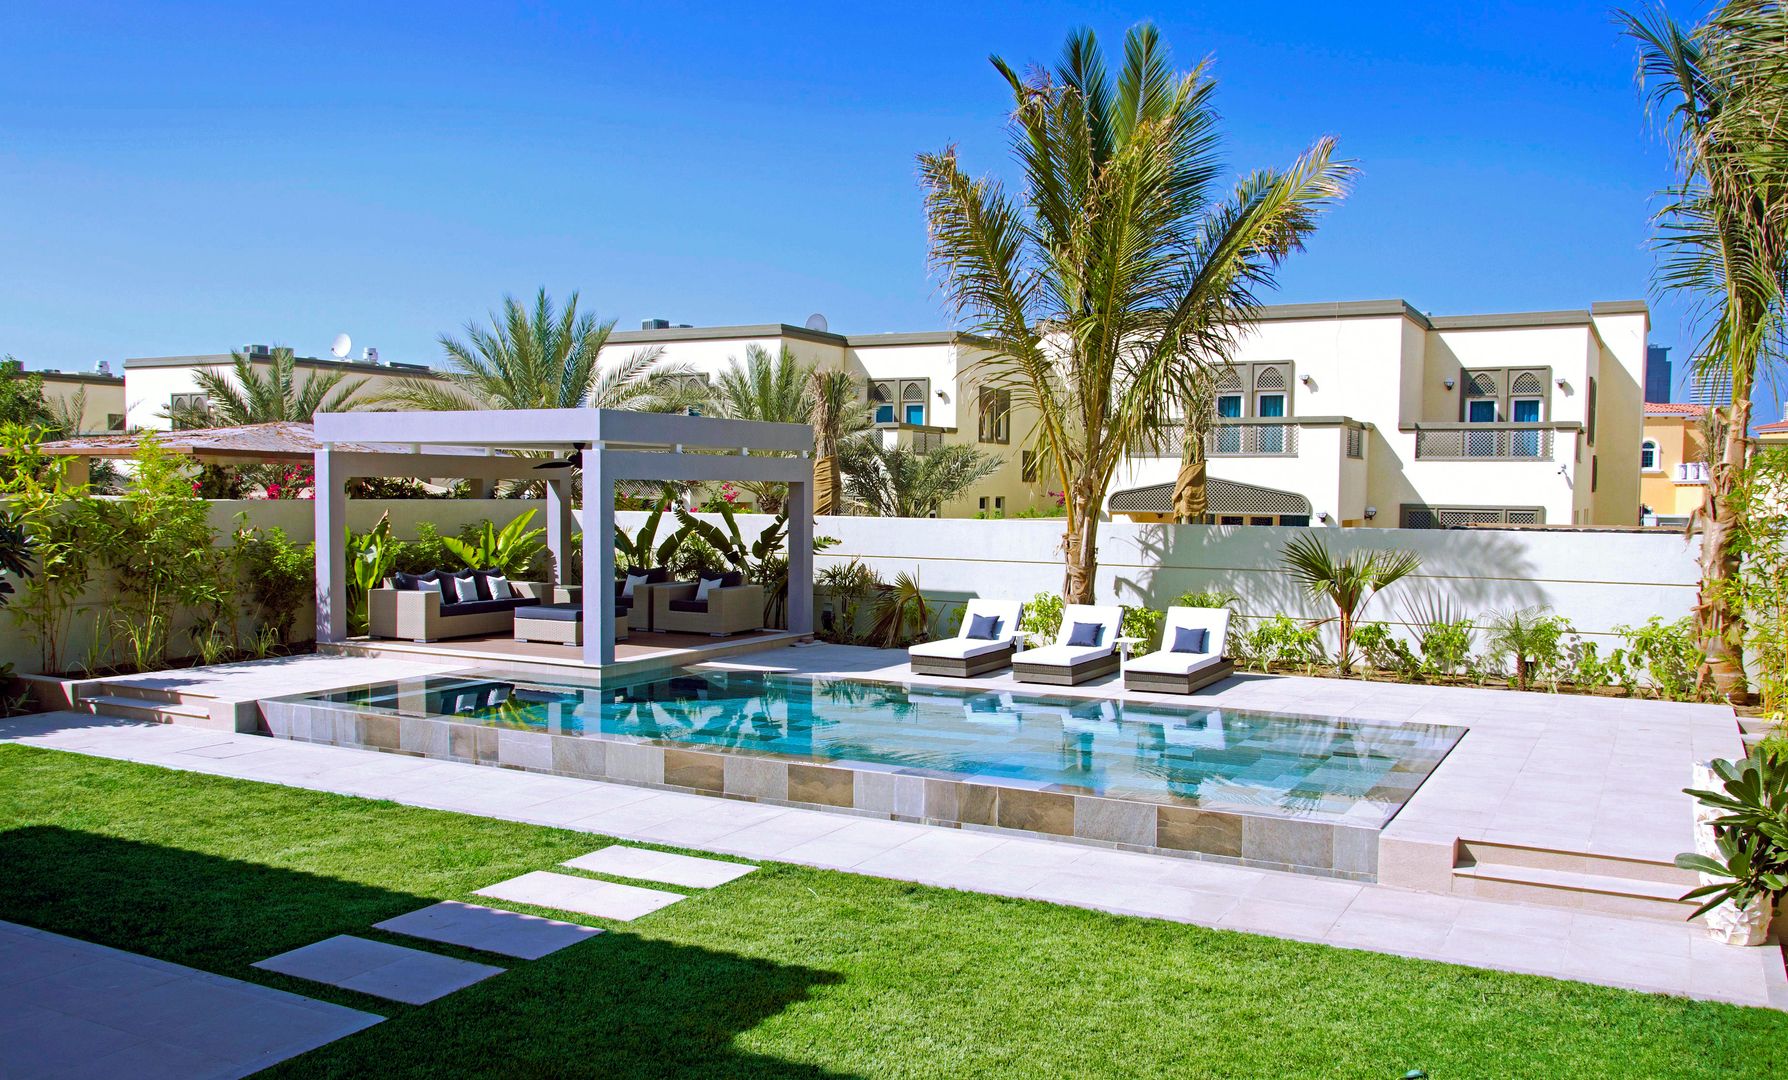 Infinity pool in Italian porcelain tiles Xterior Landscaping and Pools مسبح swimming pool Dubai,landscape,design